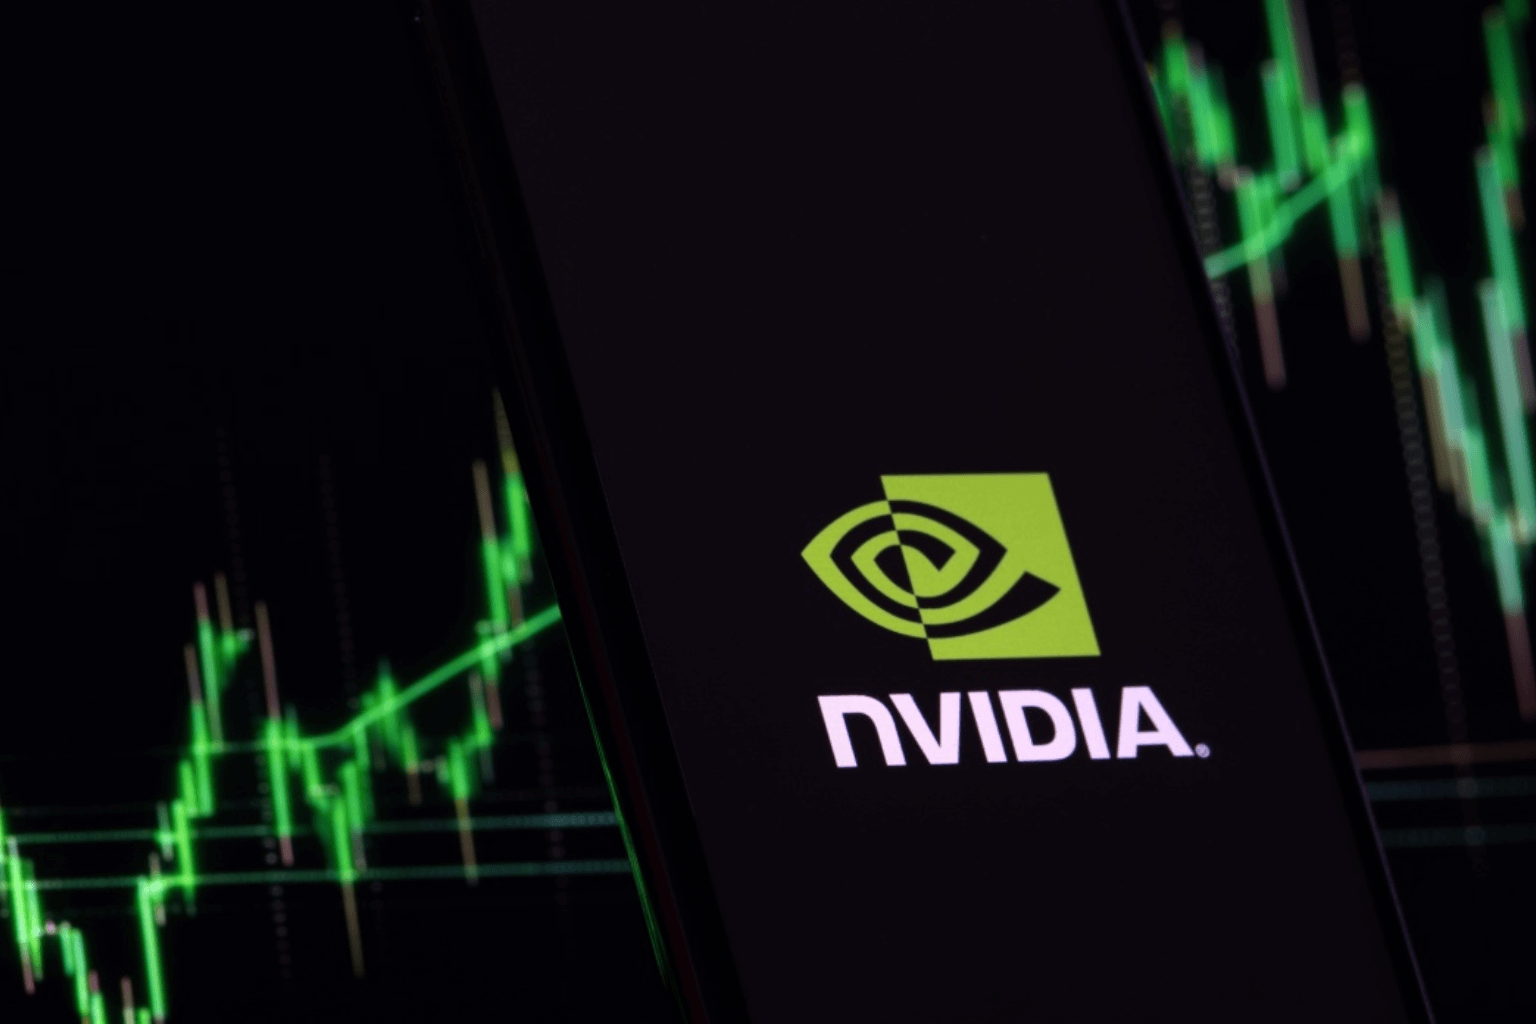 Nvidia's value exceeds $3 trillion, surpassing Apple